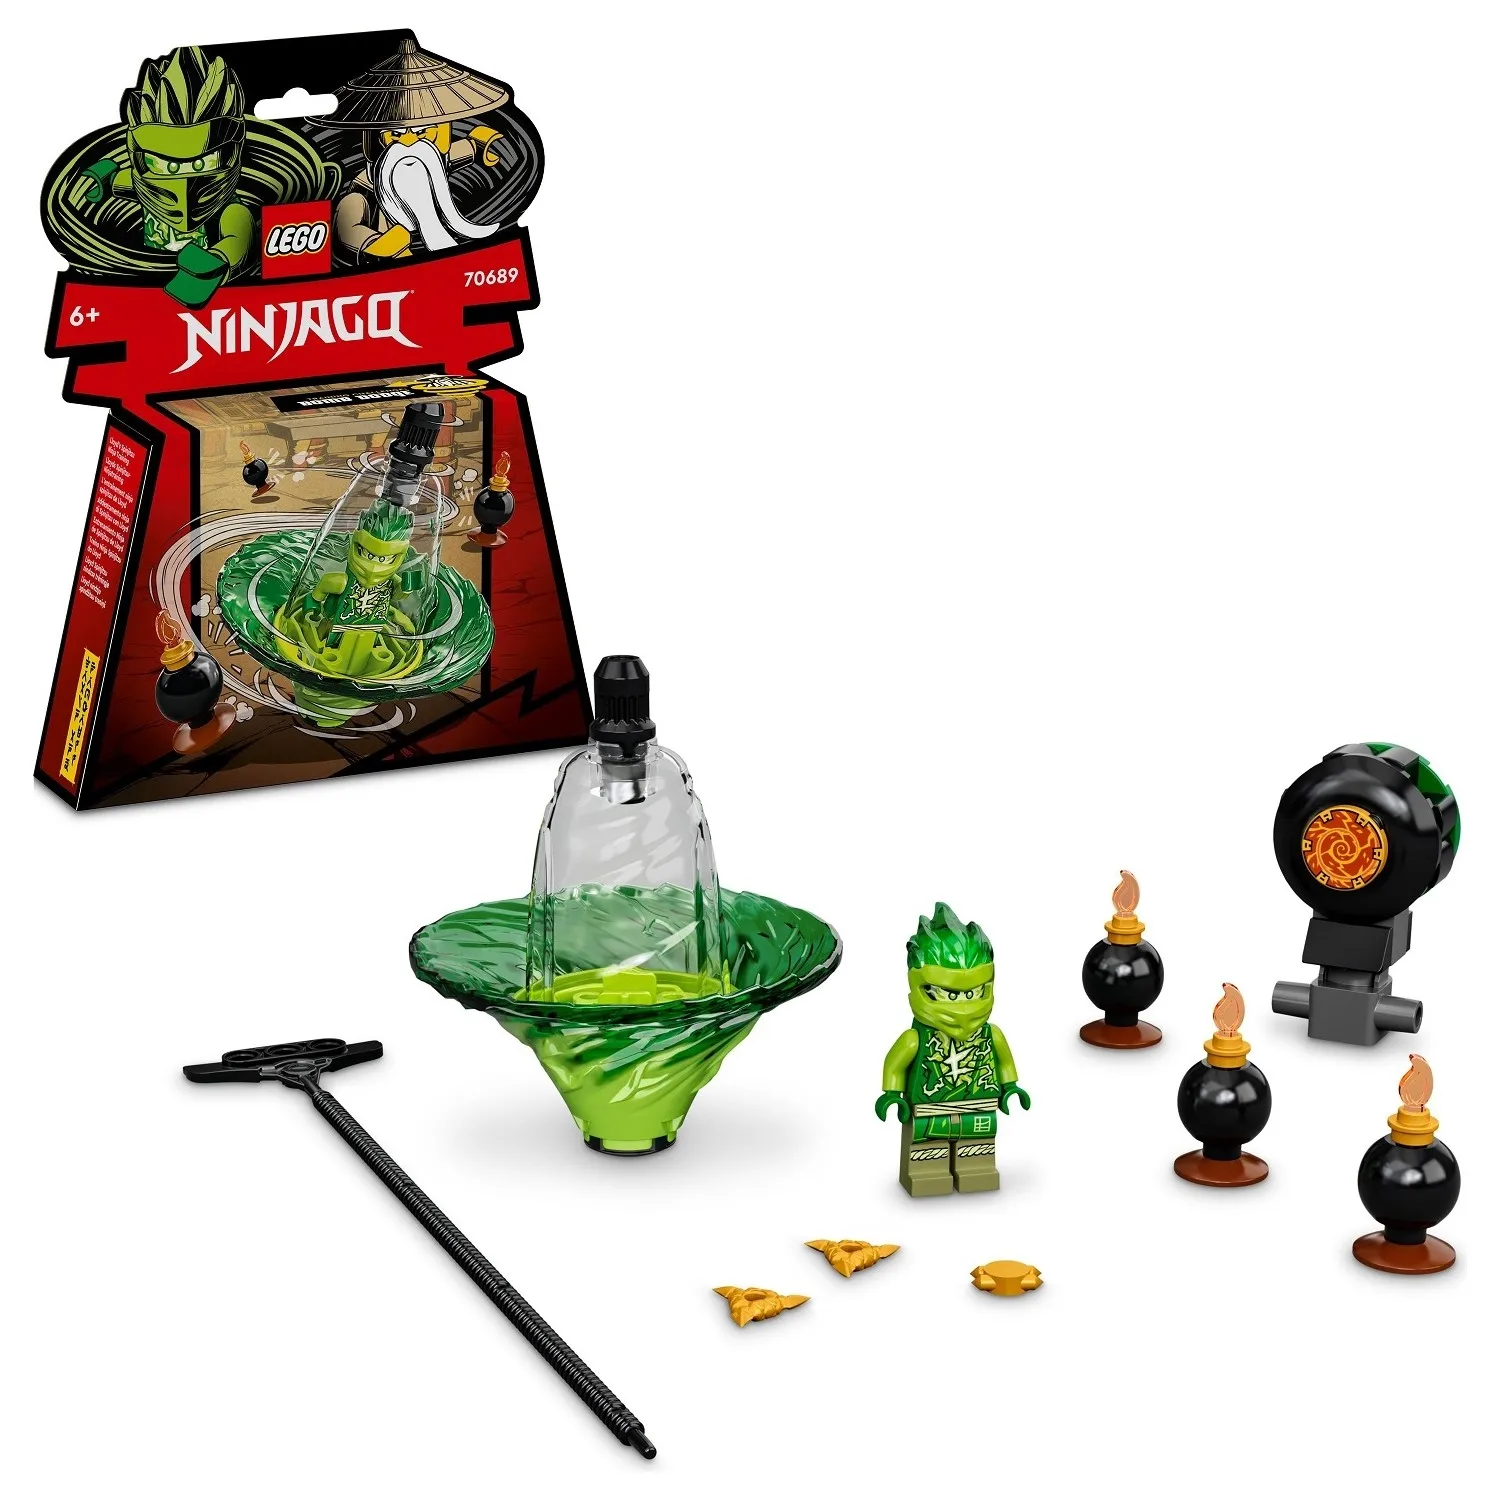 

LEGO 70688 70689 70690 Ninjago Kai's Lloyd’s and Jay’s Spinjitzu Ninja Training Spinner, Collectible Kids Spinning Action Toy